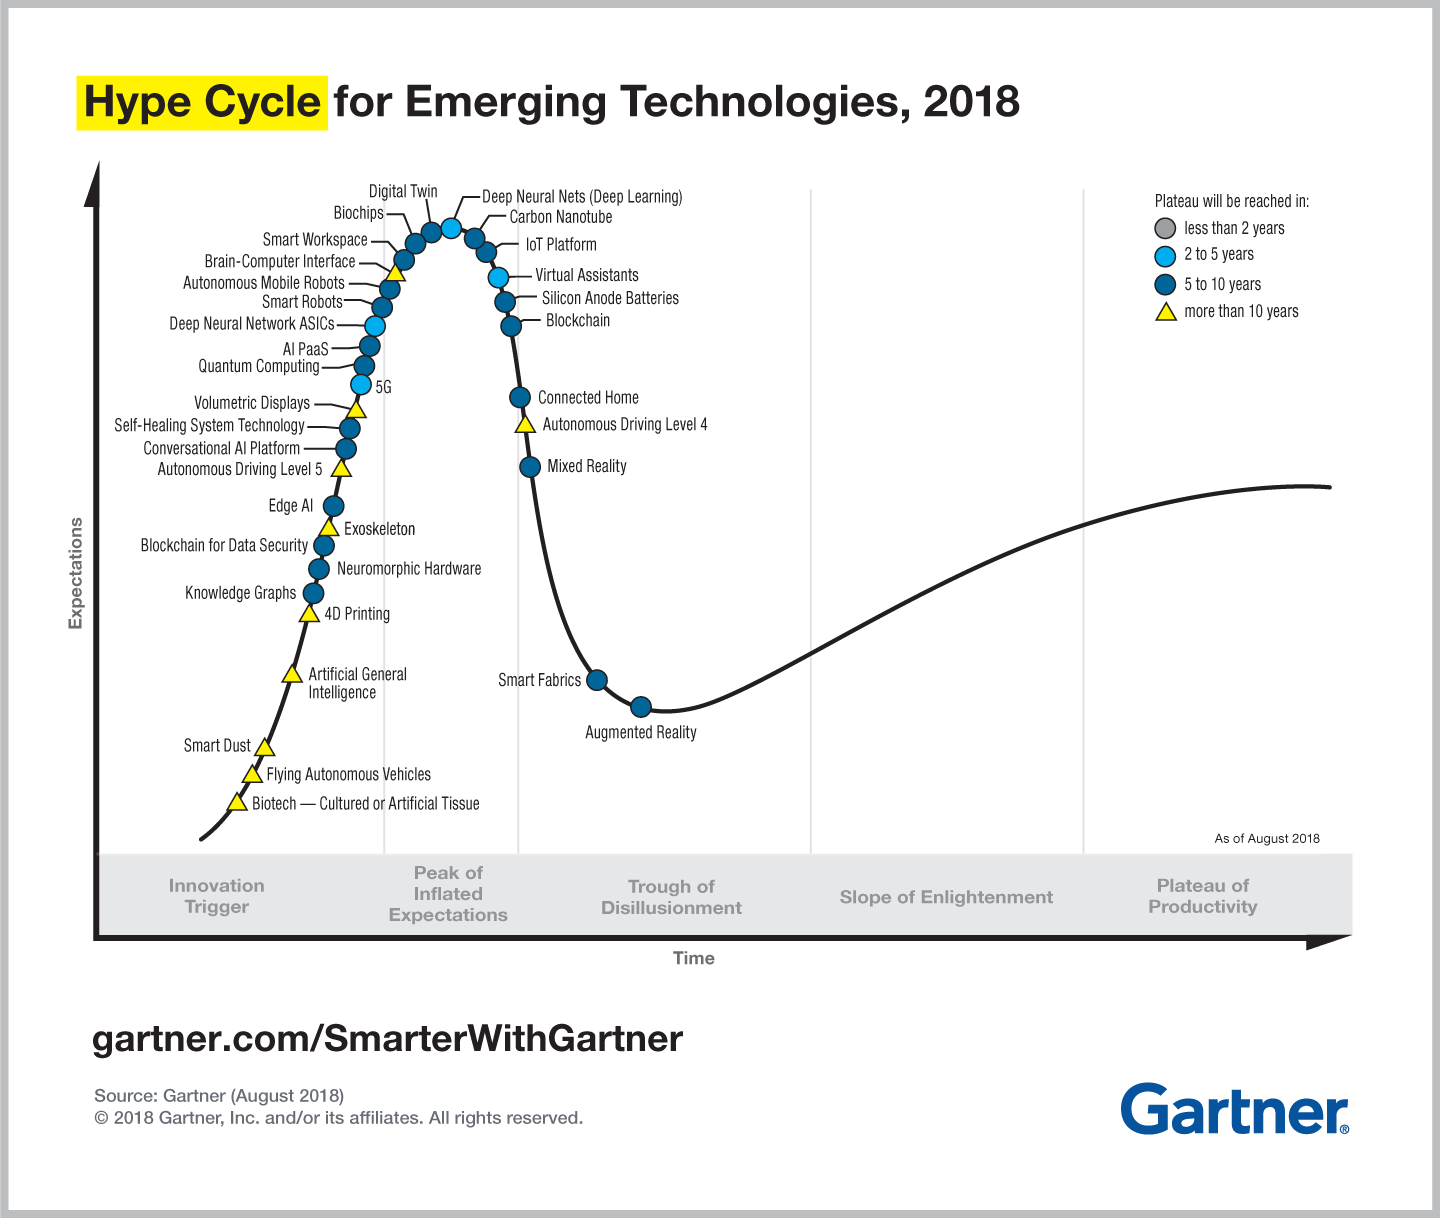 gartner-hype-cycle-for-emerging-technologies-2018